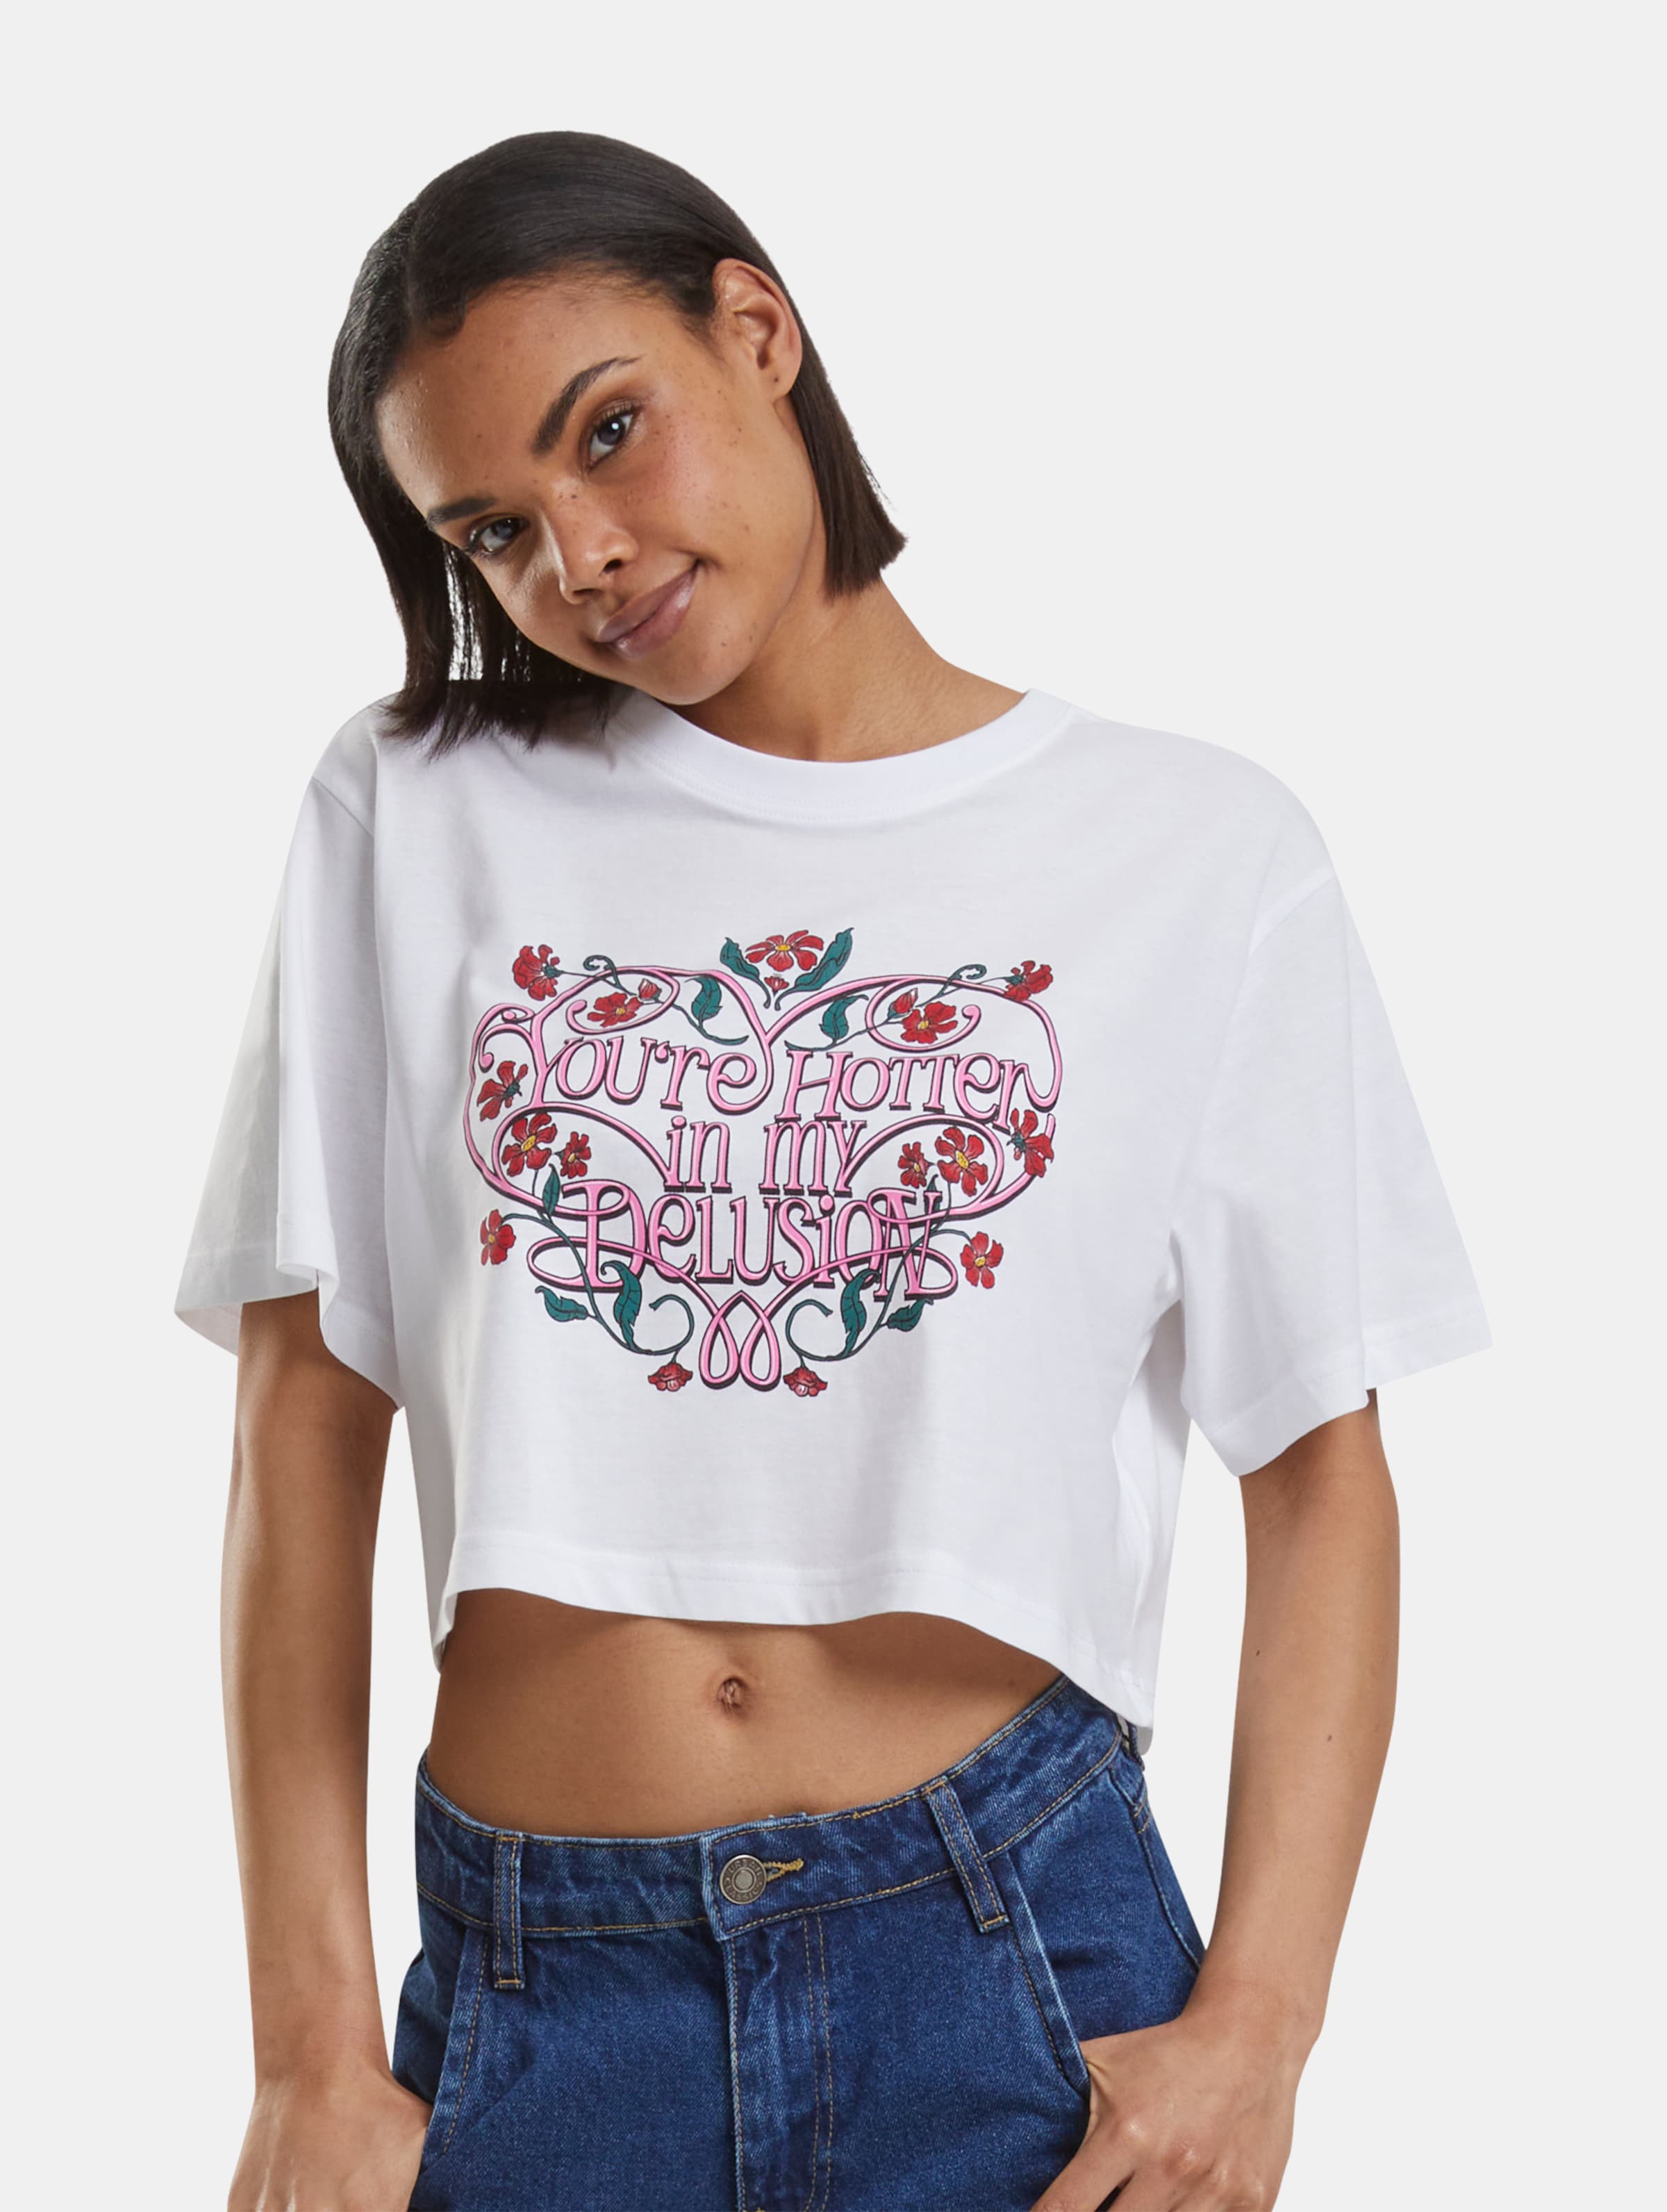 Miss Tee Hotter Delusion Short Overized T-Shirts Frauen,Unisex op kleur wit, Maat XL